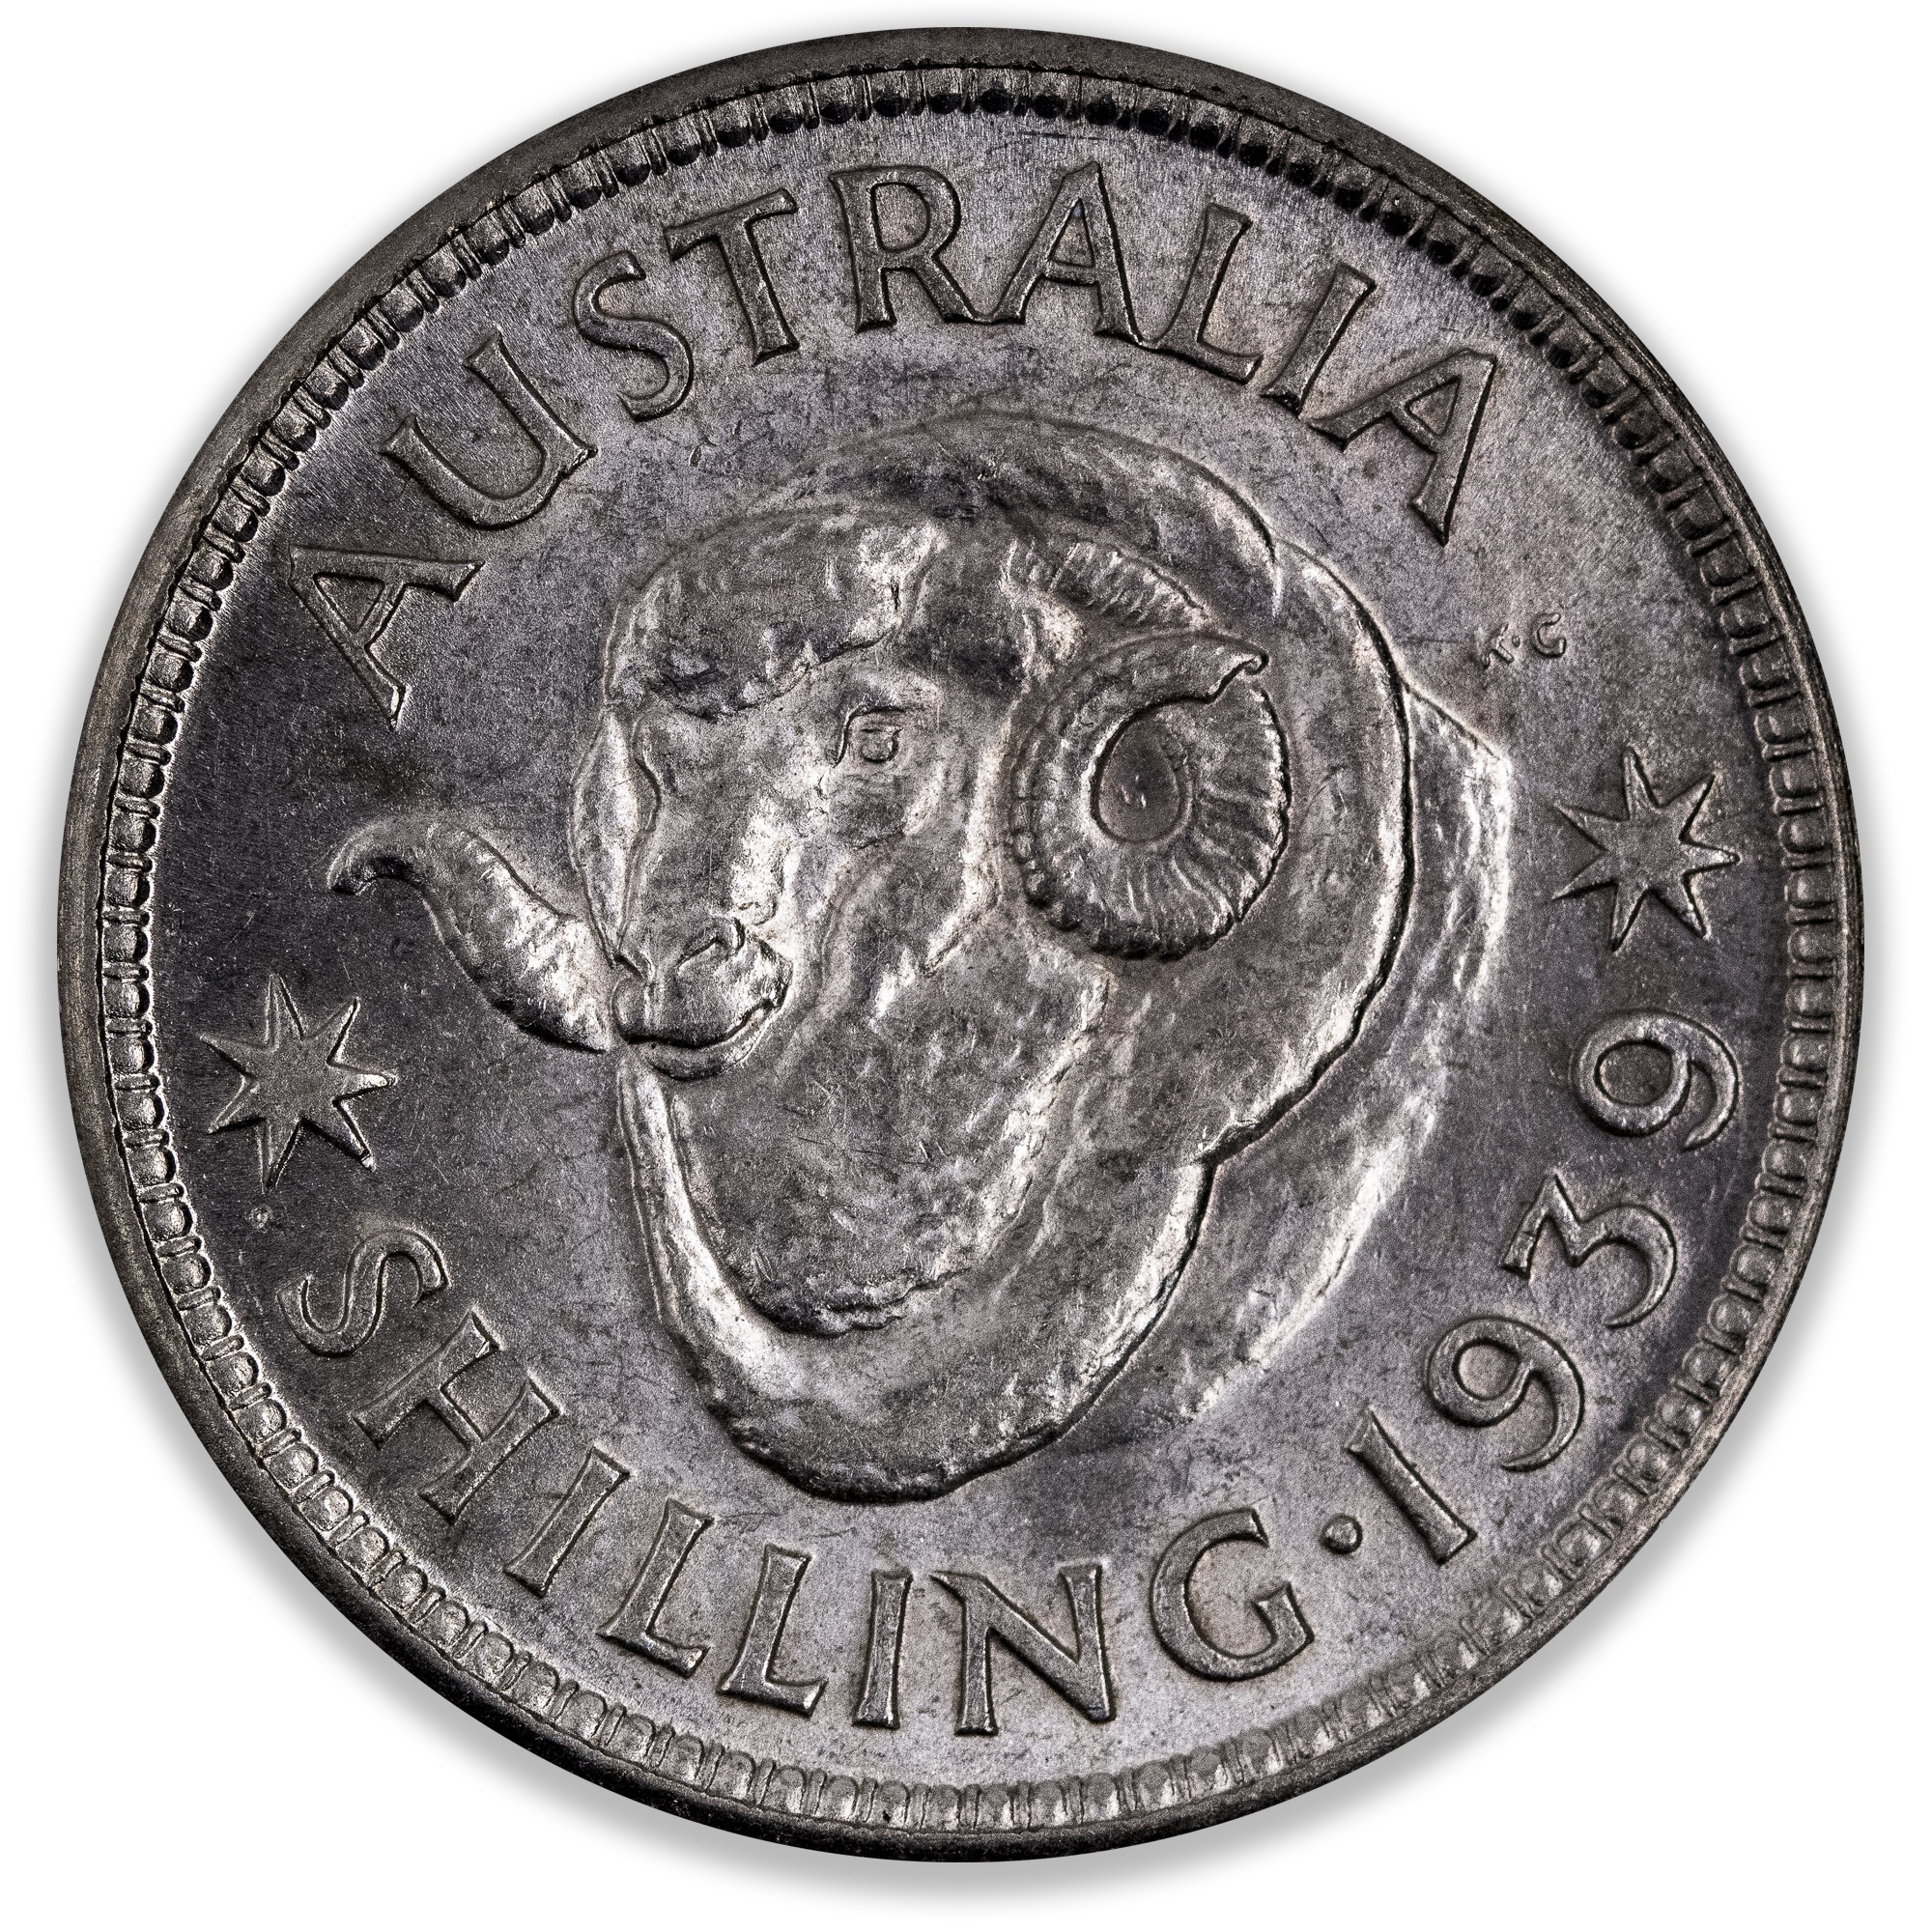 1939 Australian Shilling Nice Uncirculated